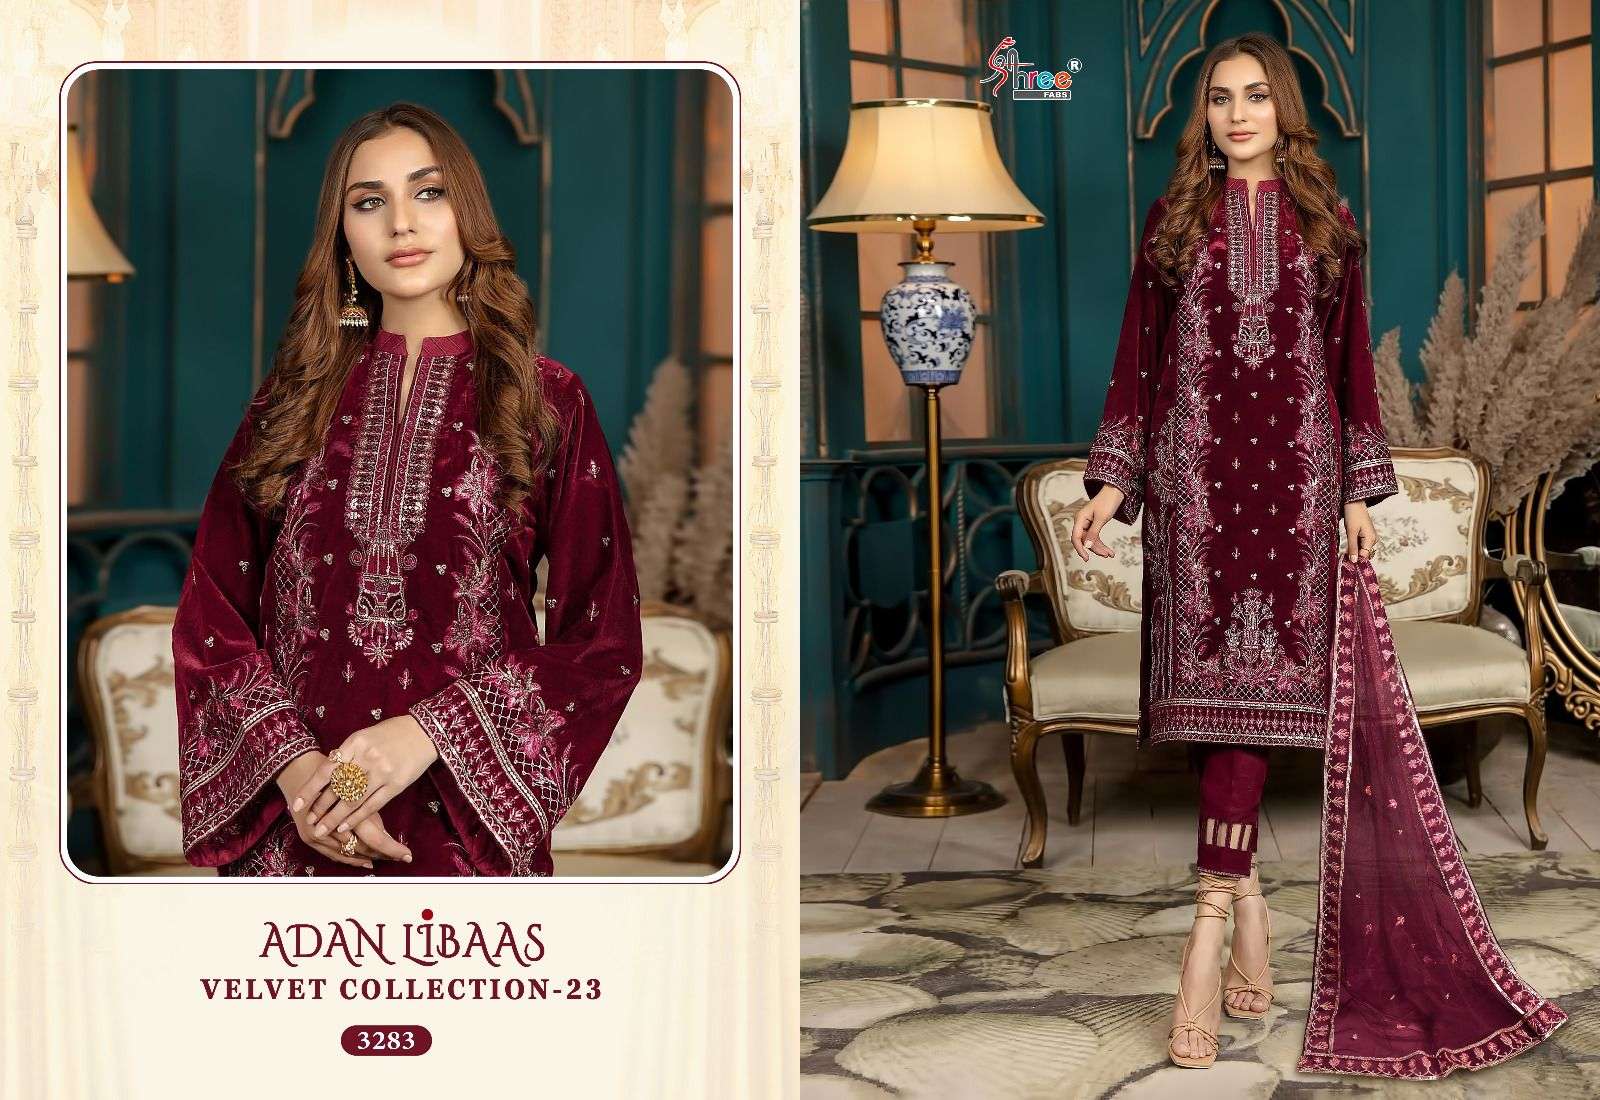 adan libas velvet collection vol-23 by shree fabs 3280-3285 series winter wear salwar kameez catalog wholesale price 